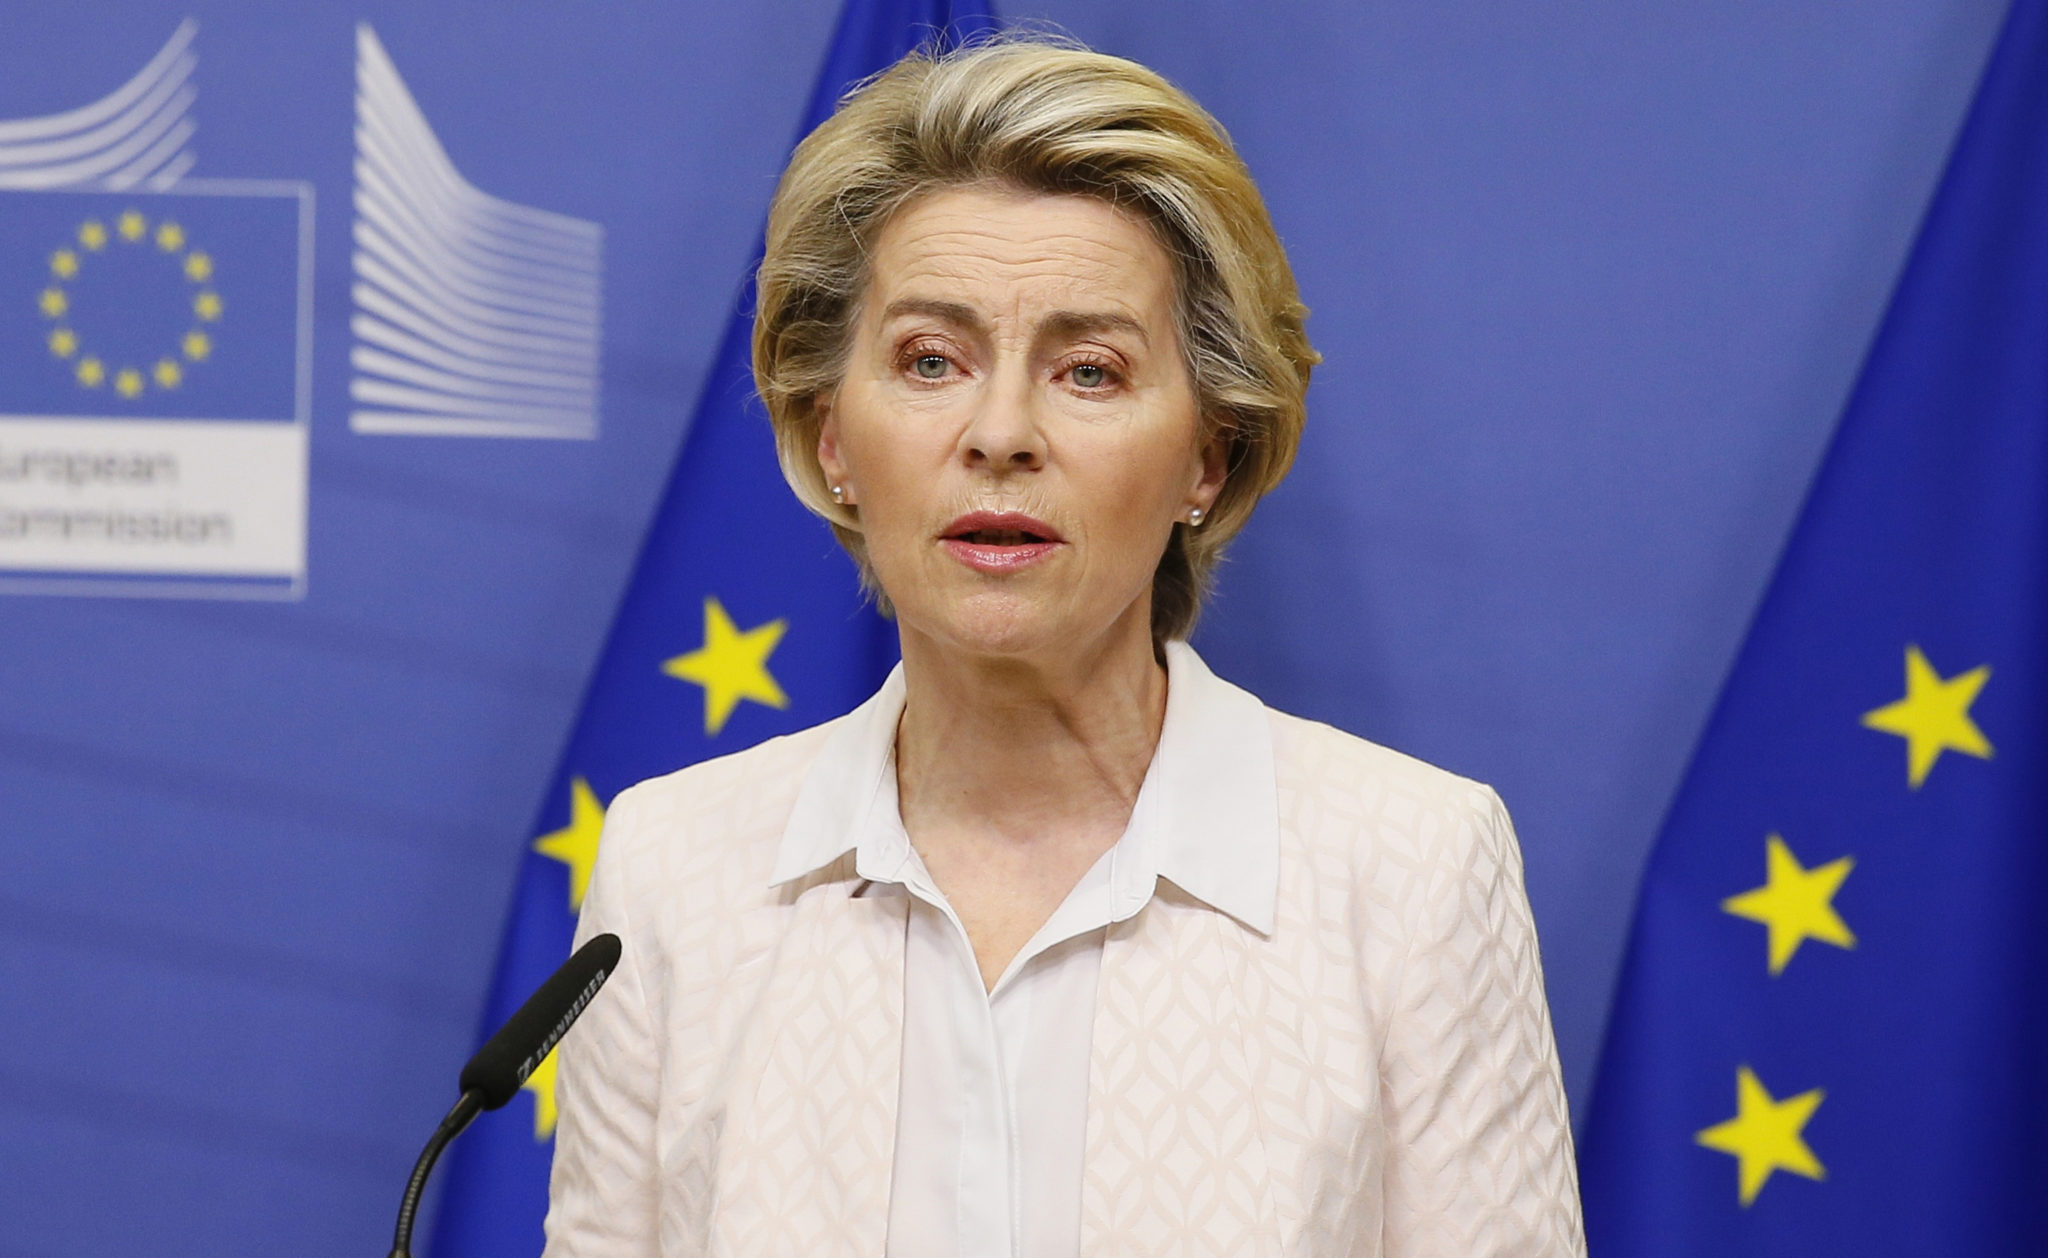 European Commission President Ursula von der Leyen makes a statement on camera regarding Brexit negotiations at EU headquarters in Brussels